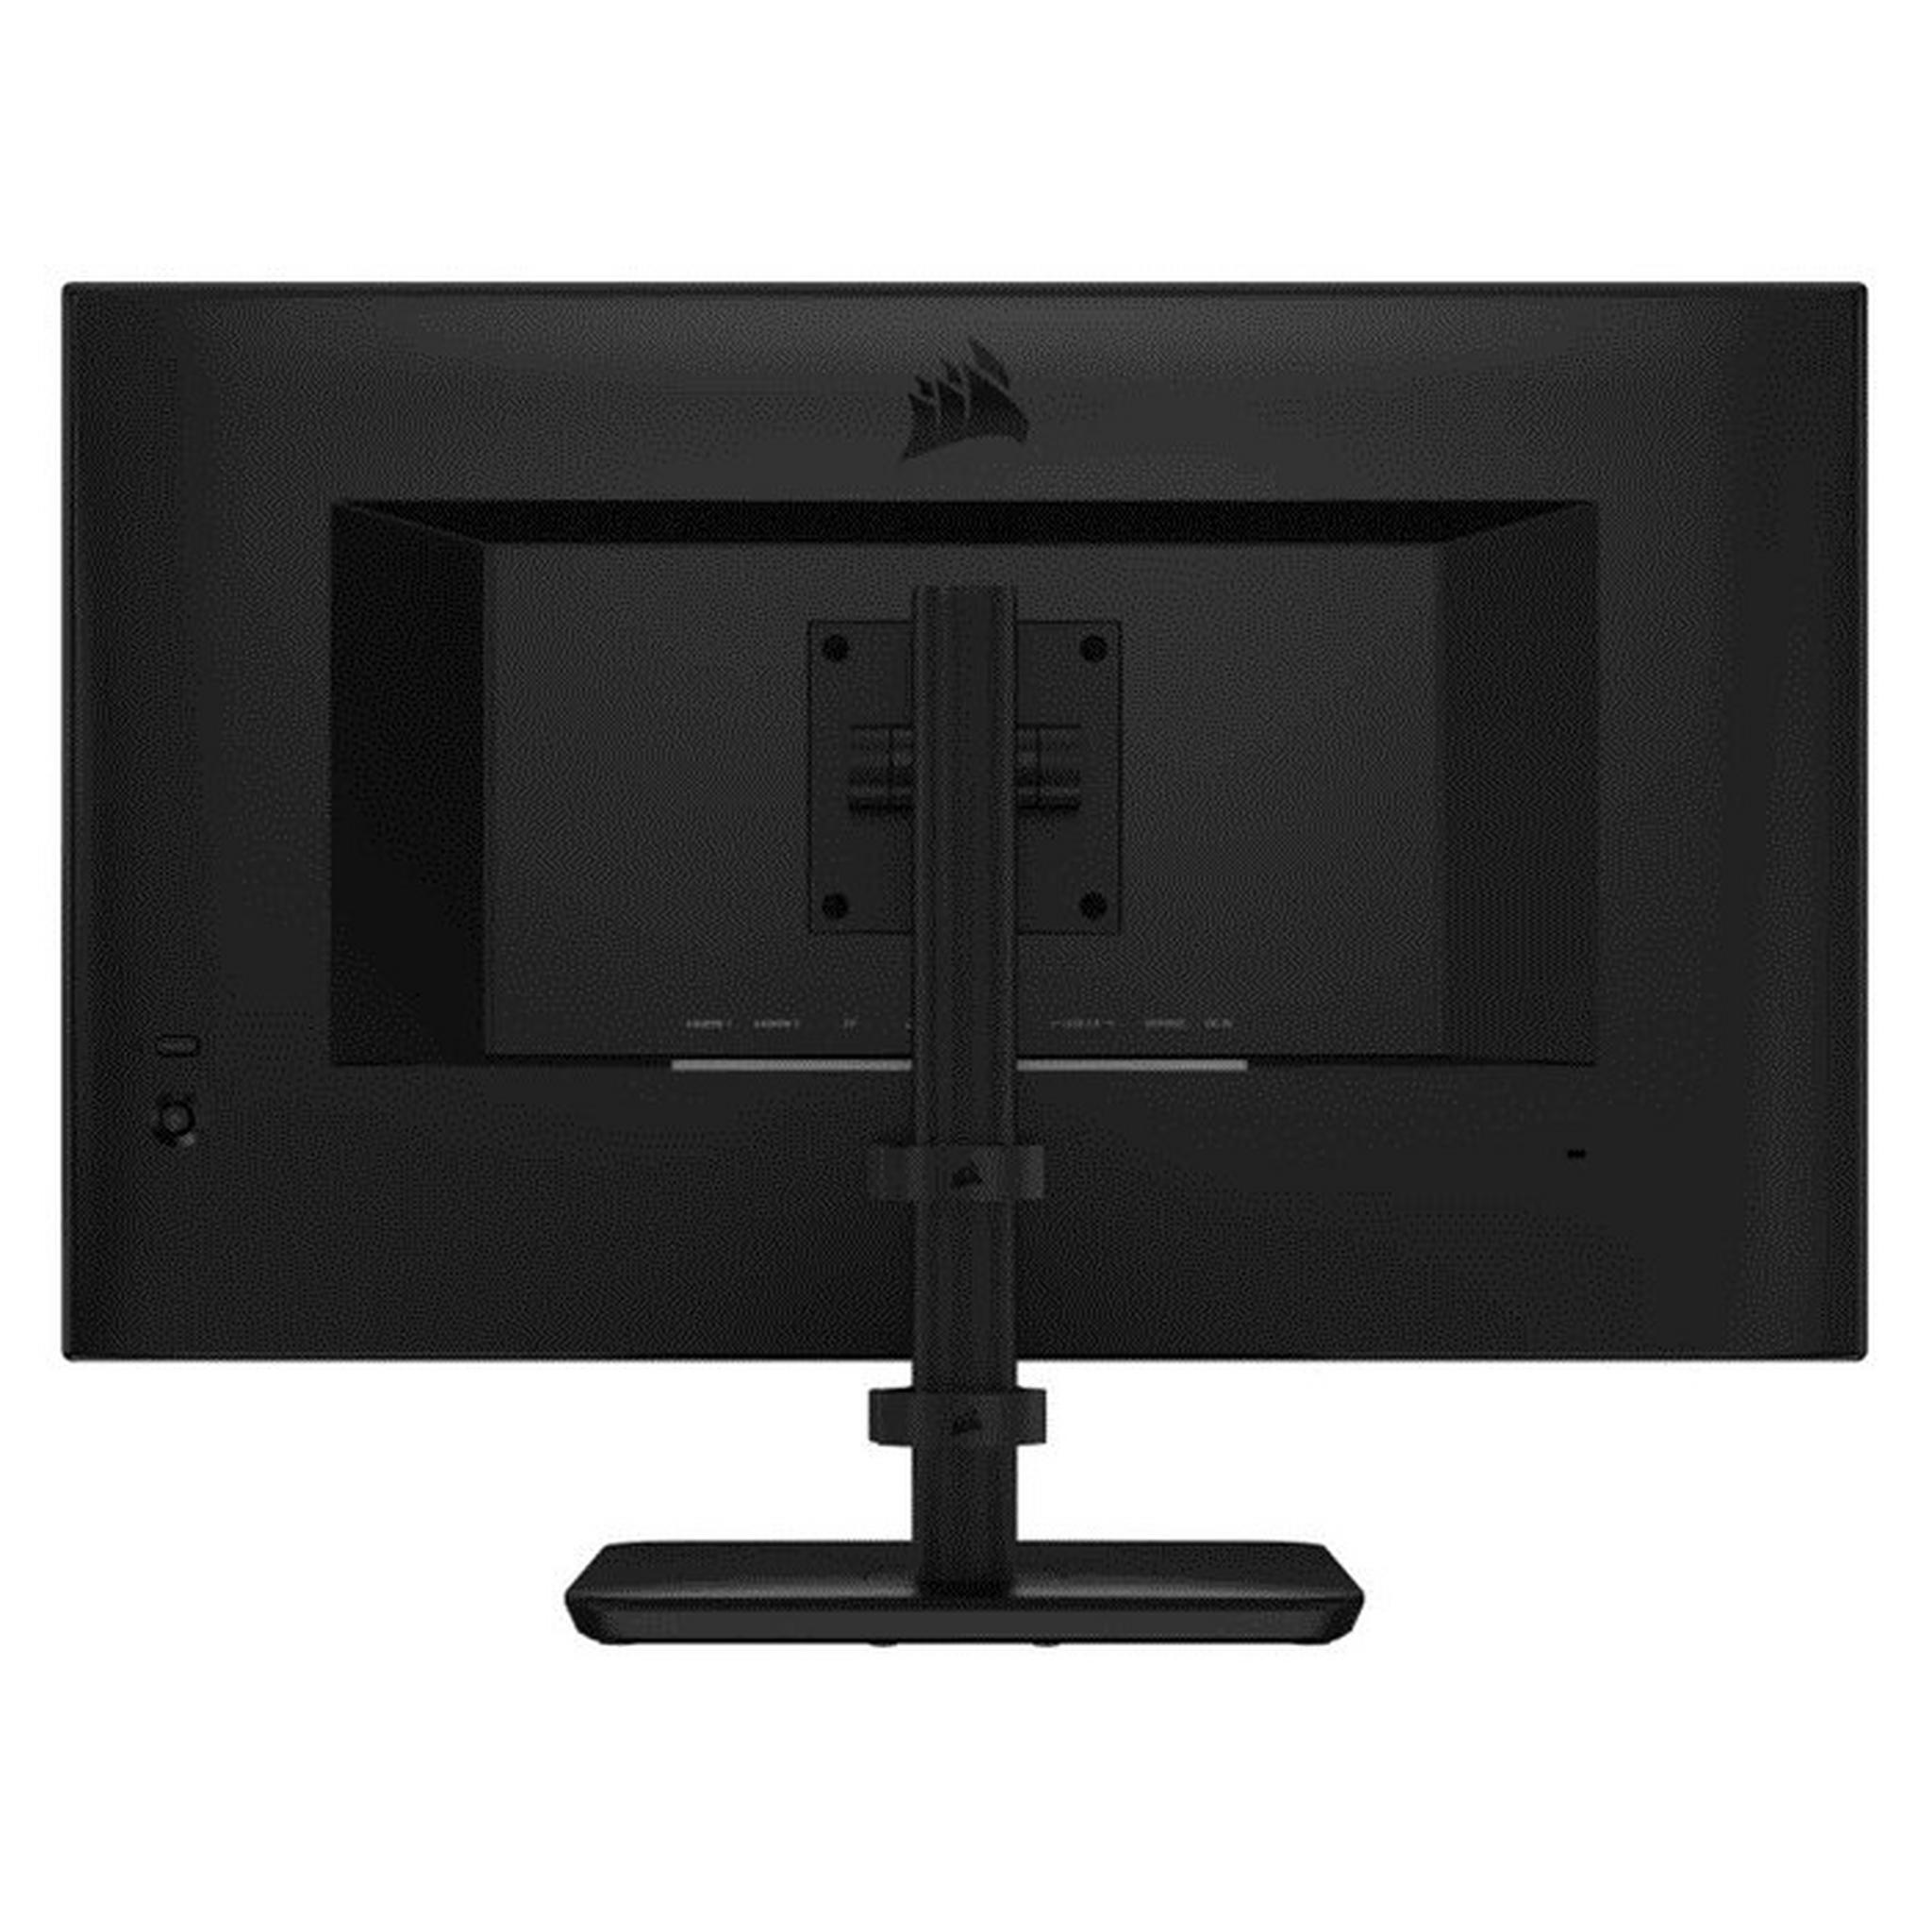 Corsair Xeneon QHD 31.5-inch Gaming Monitor, 165Hz, CM-9020007-PE – Black